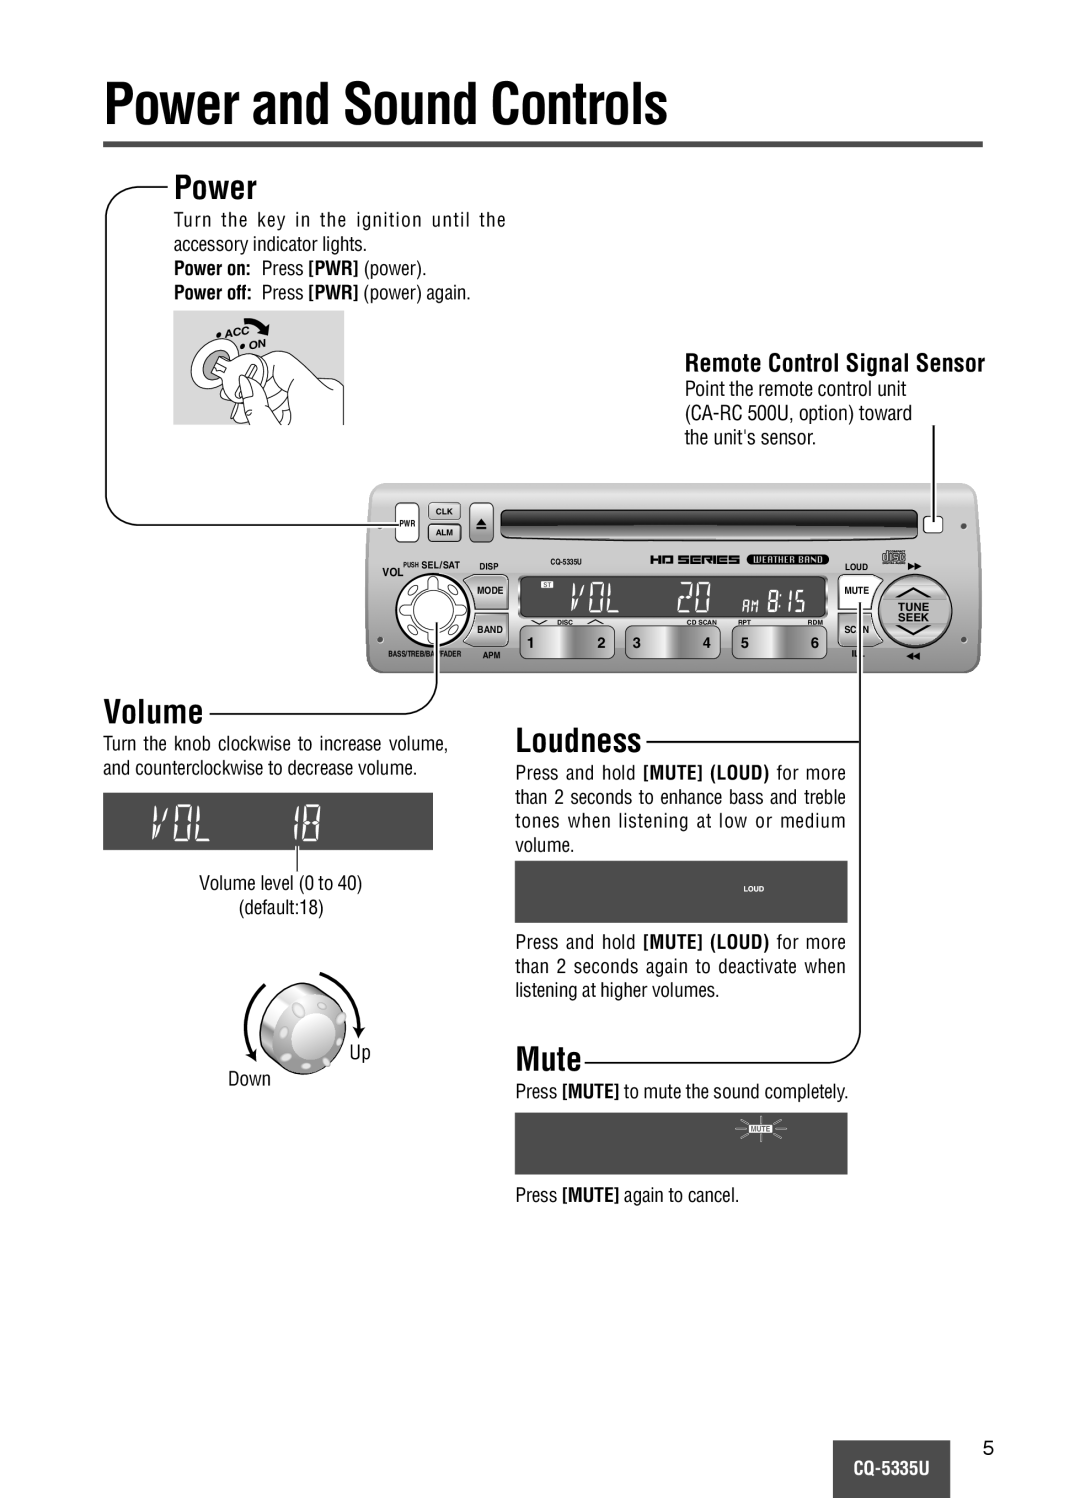 Panasonic CQ-5335U operating instructions Power and Sound Controls, Volume, Loudness, Mute, Remote Control Signal Sensor 